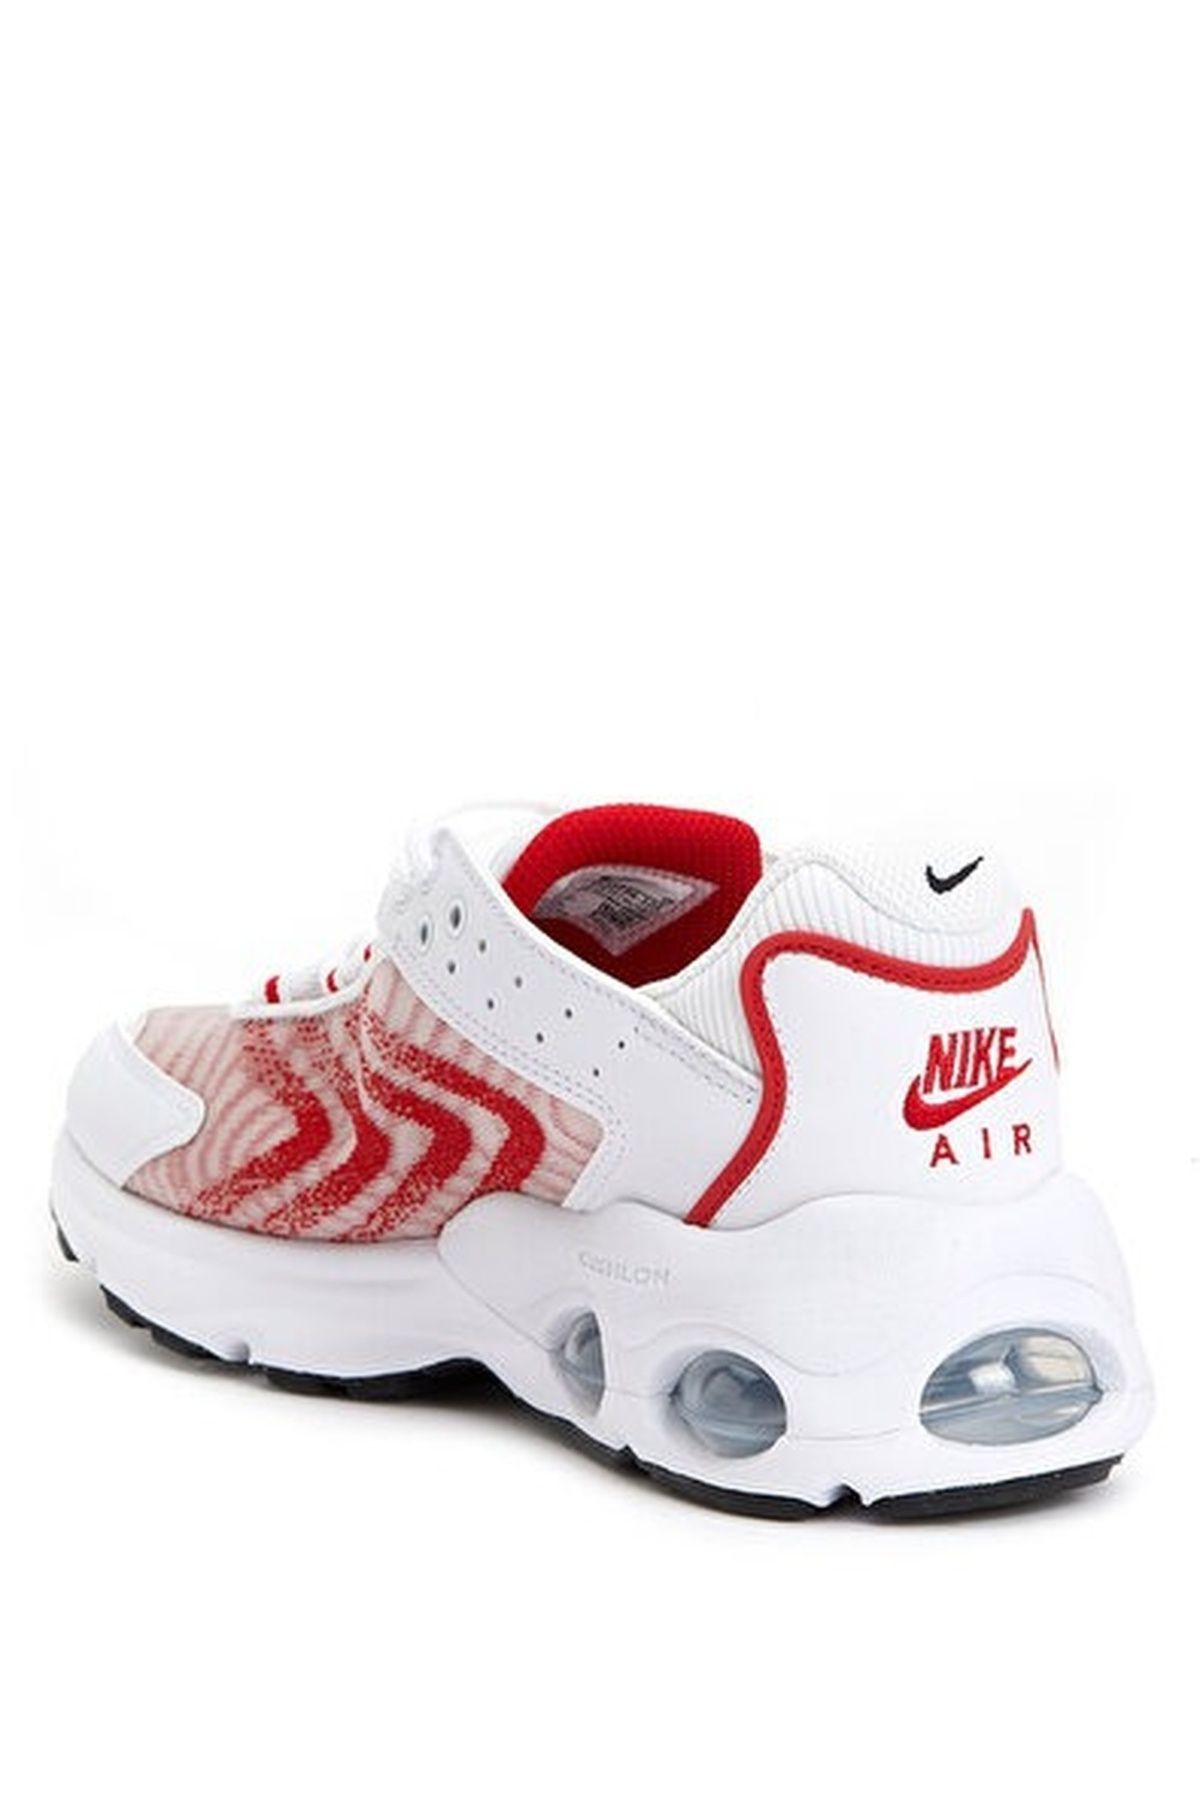 Nike کفش کتانی ورزشی یونیسکس مدل Unisex Air Max Tw